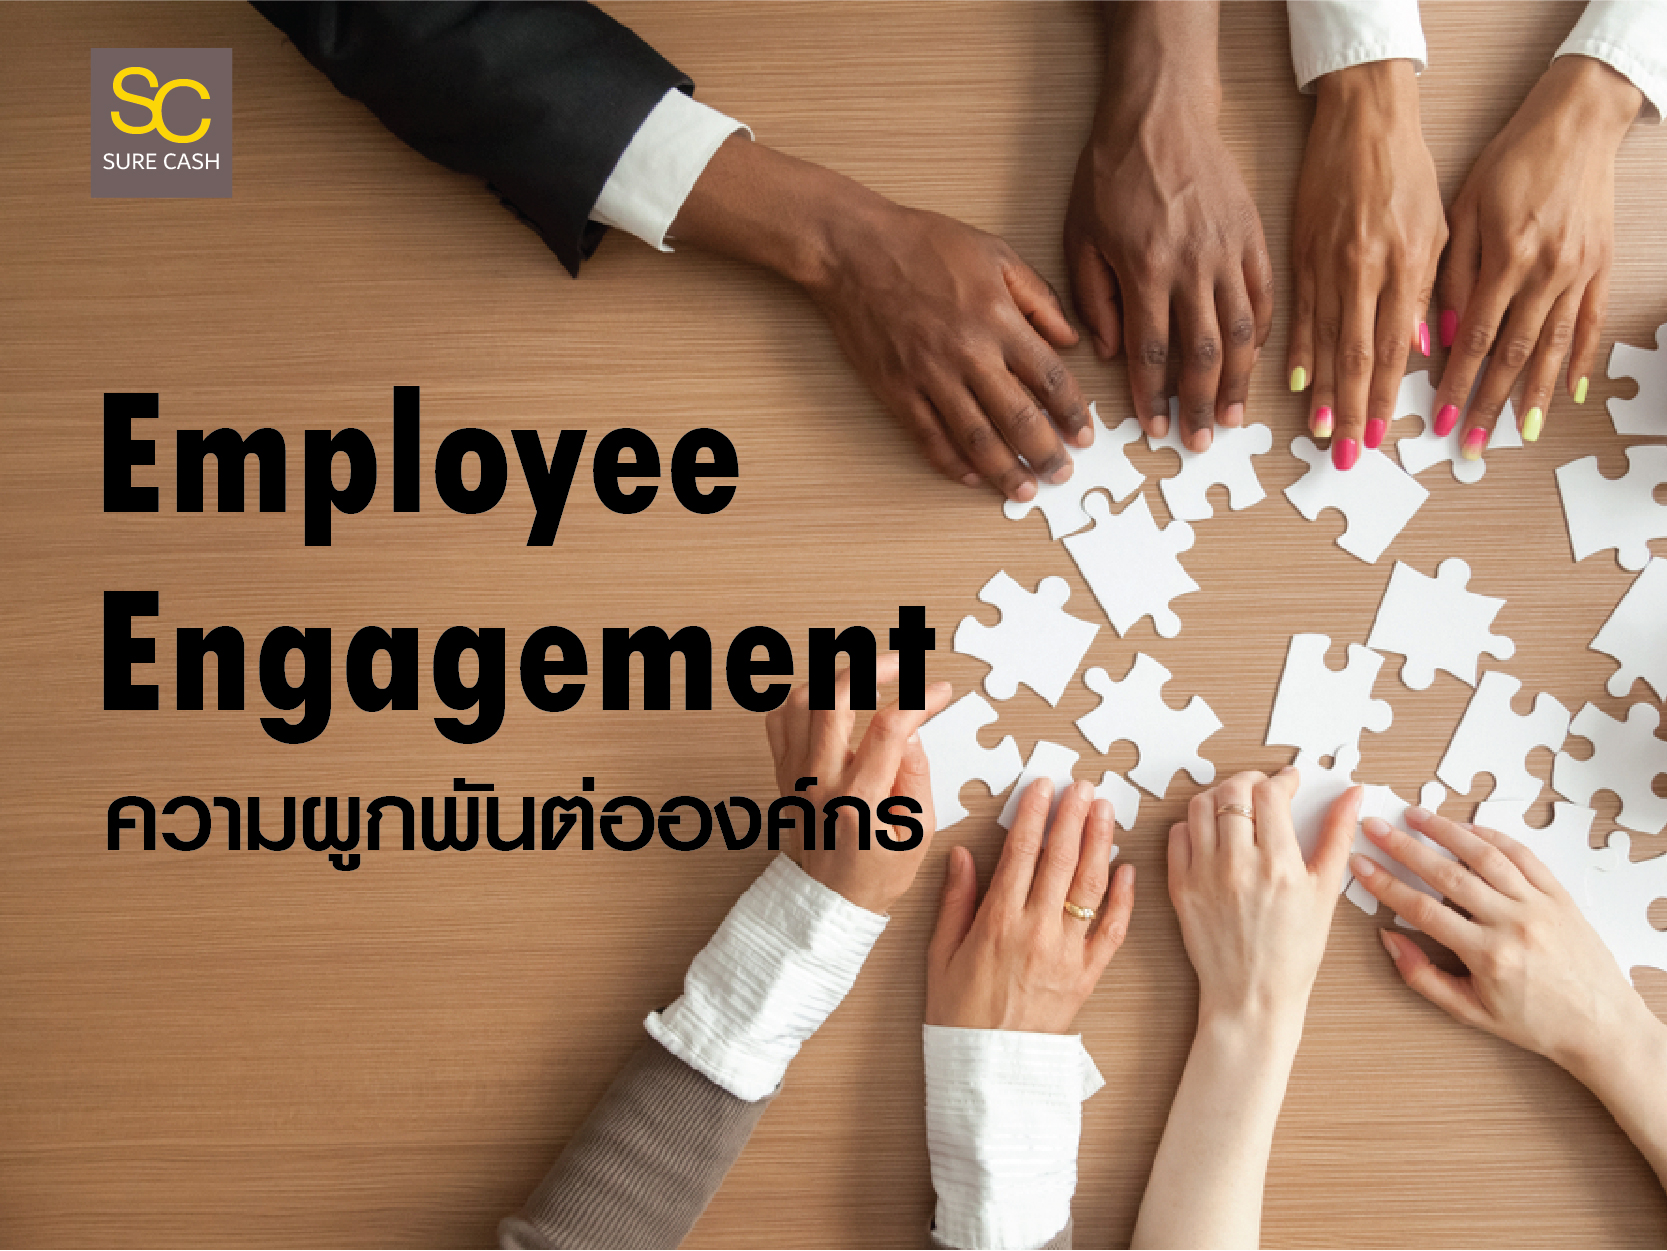 Employee Engagement ความผูกพันต่อองค์กร